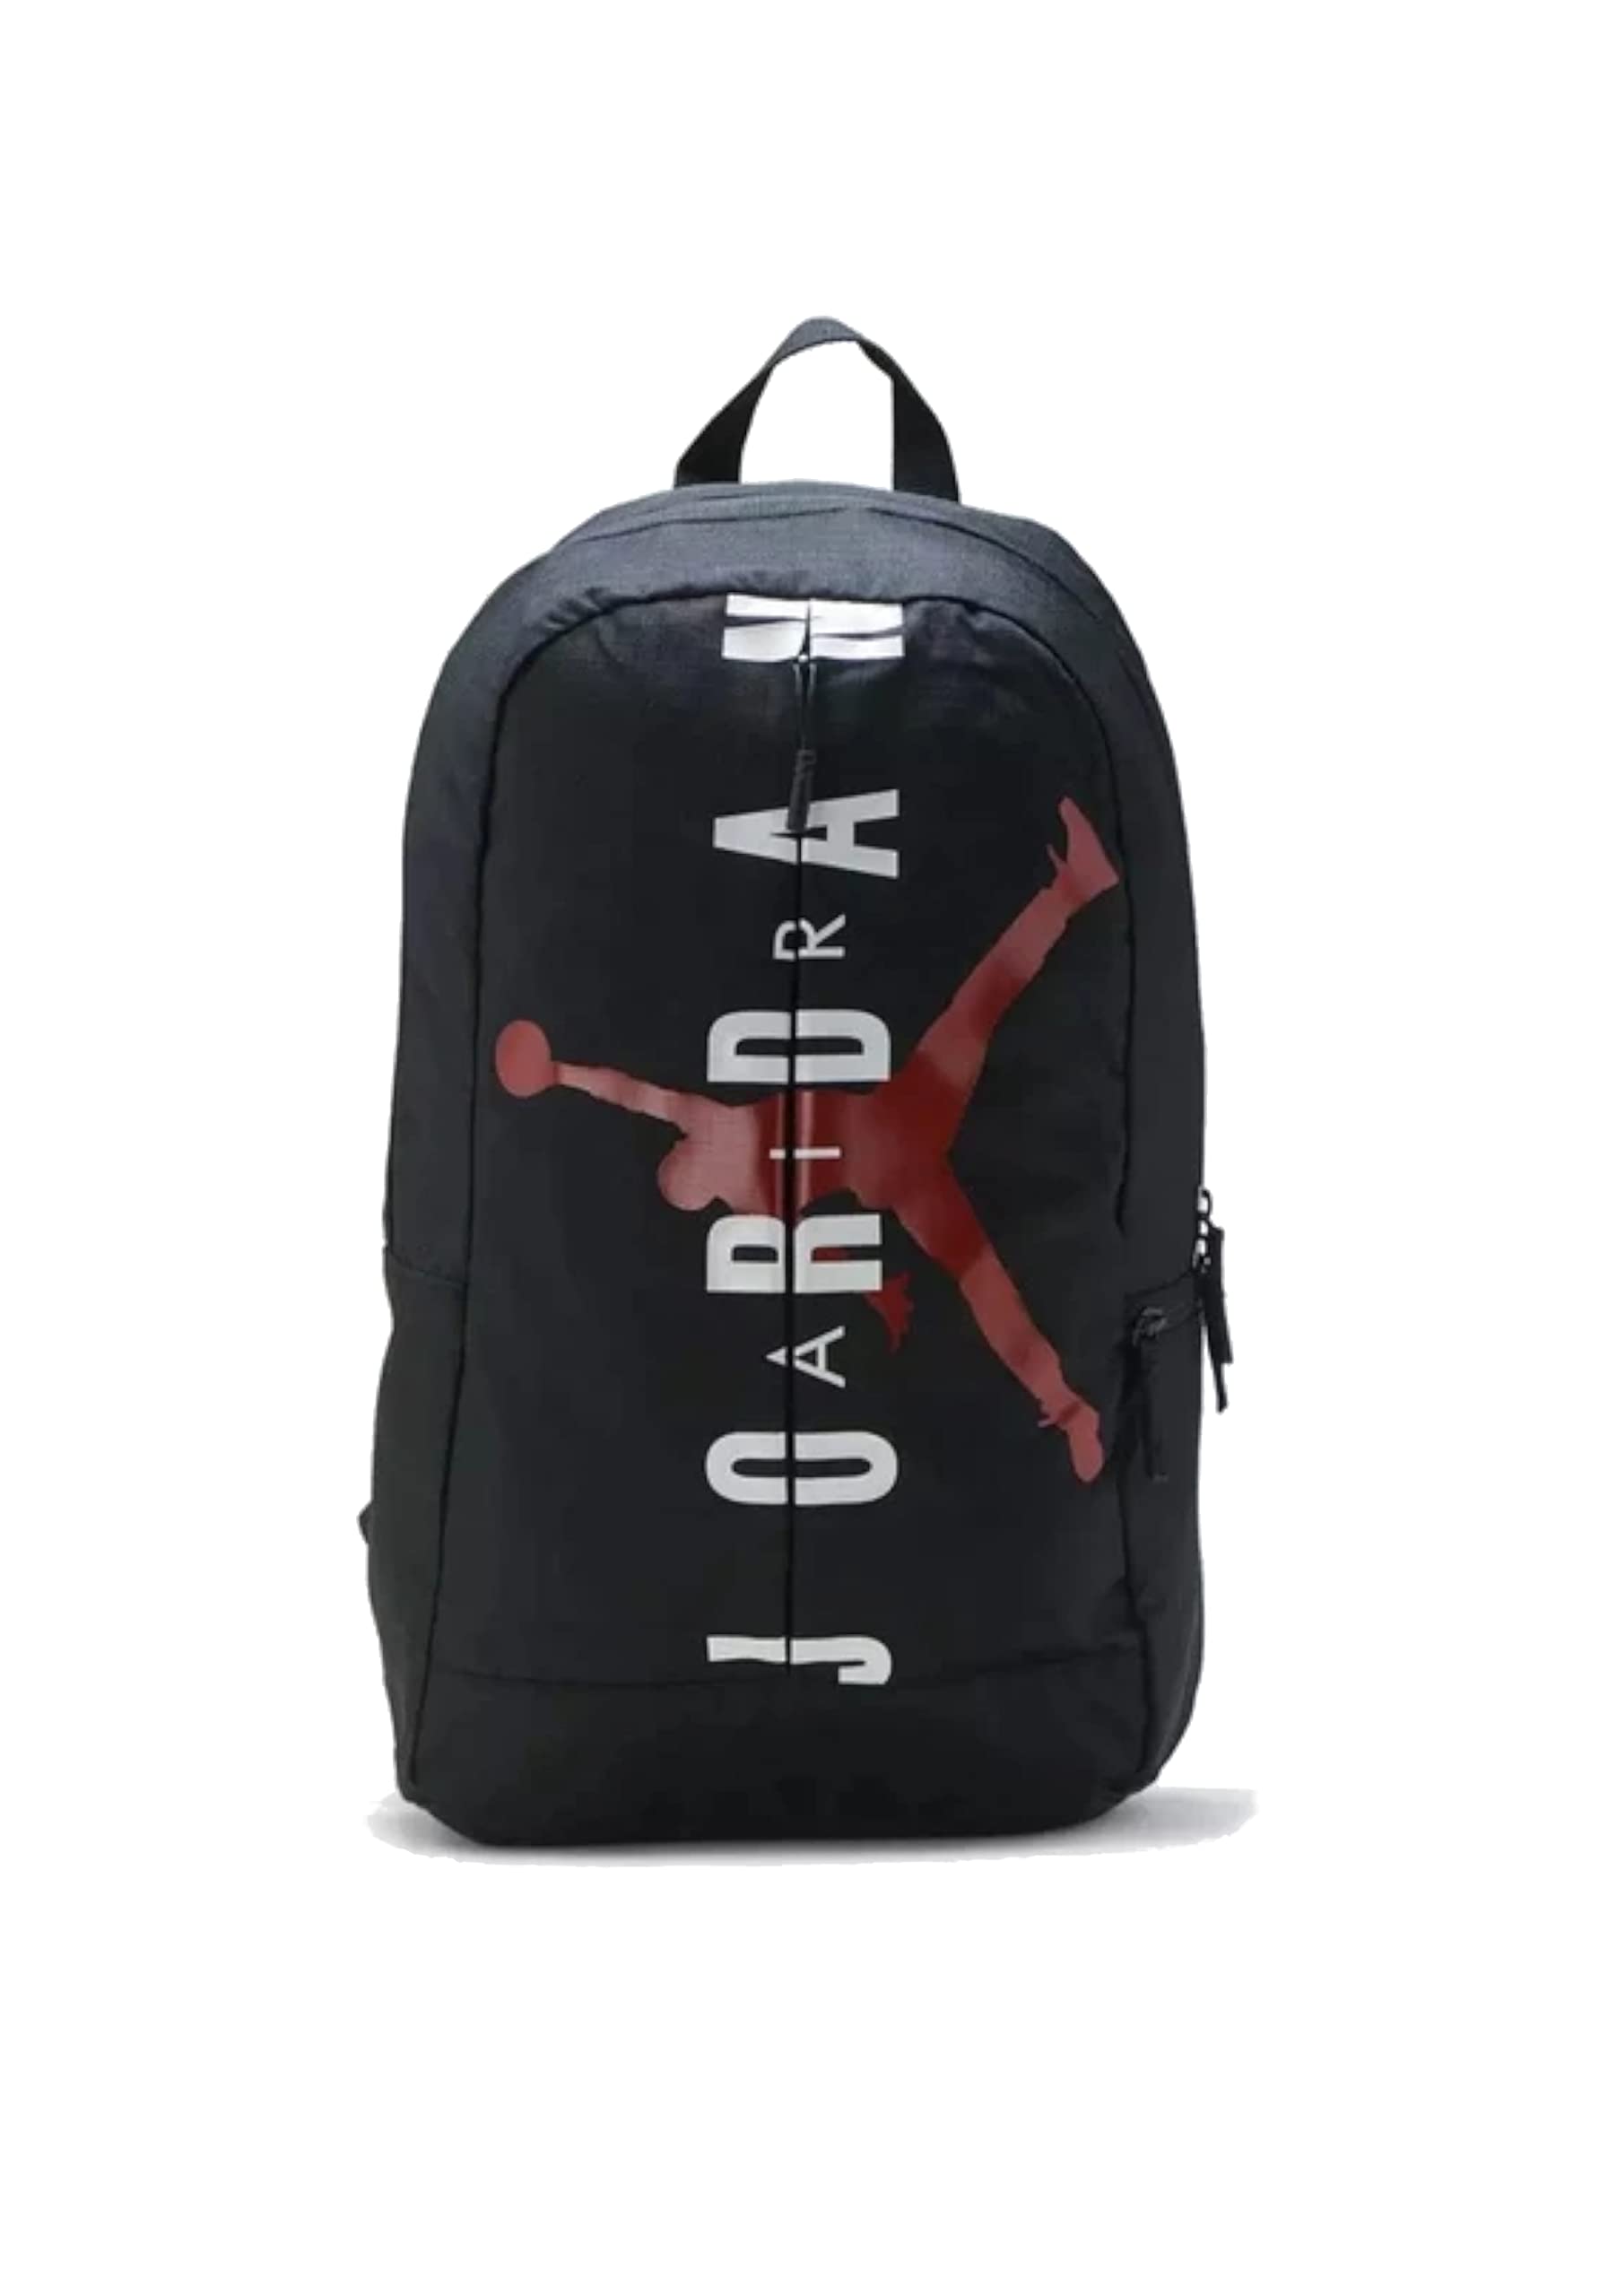 Nike Jordan Split Pack Backpack (One Size, Black)